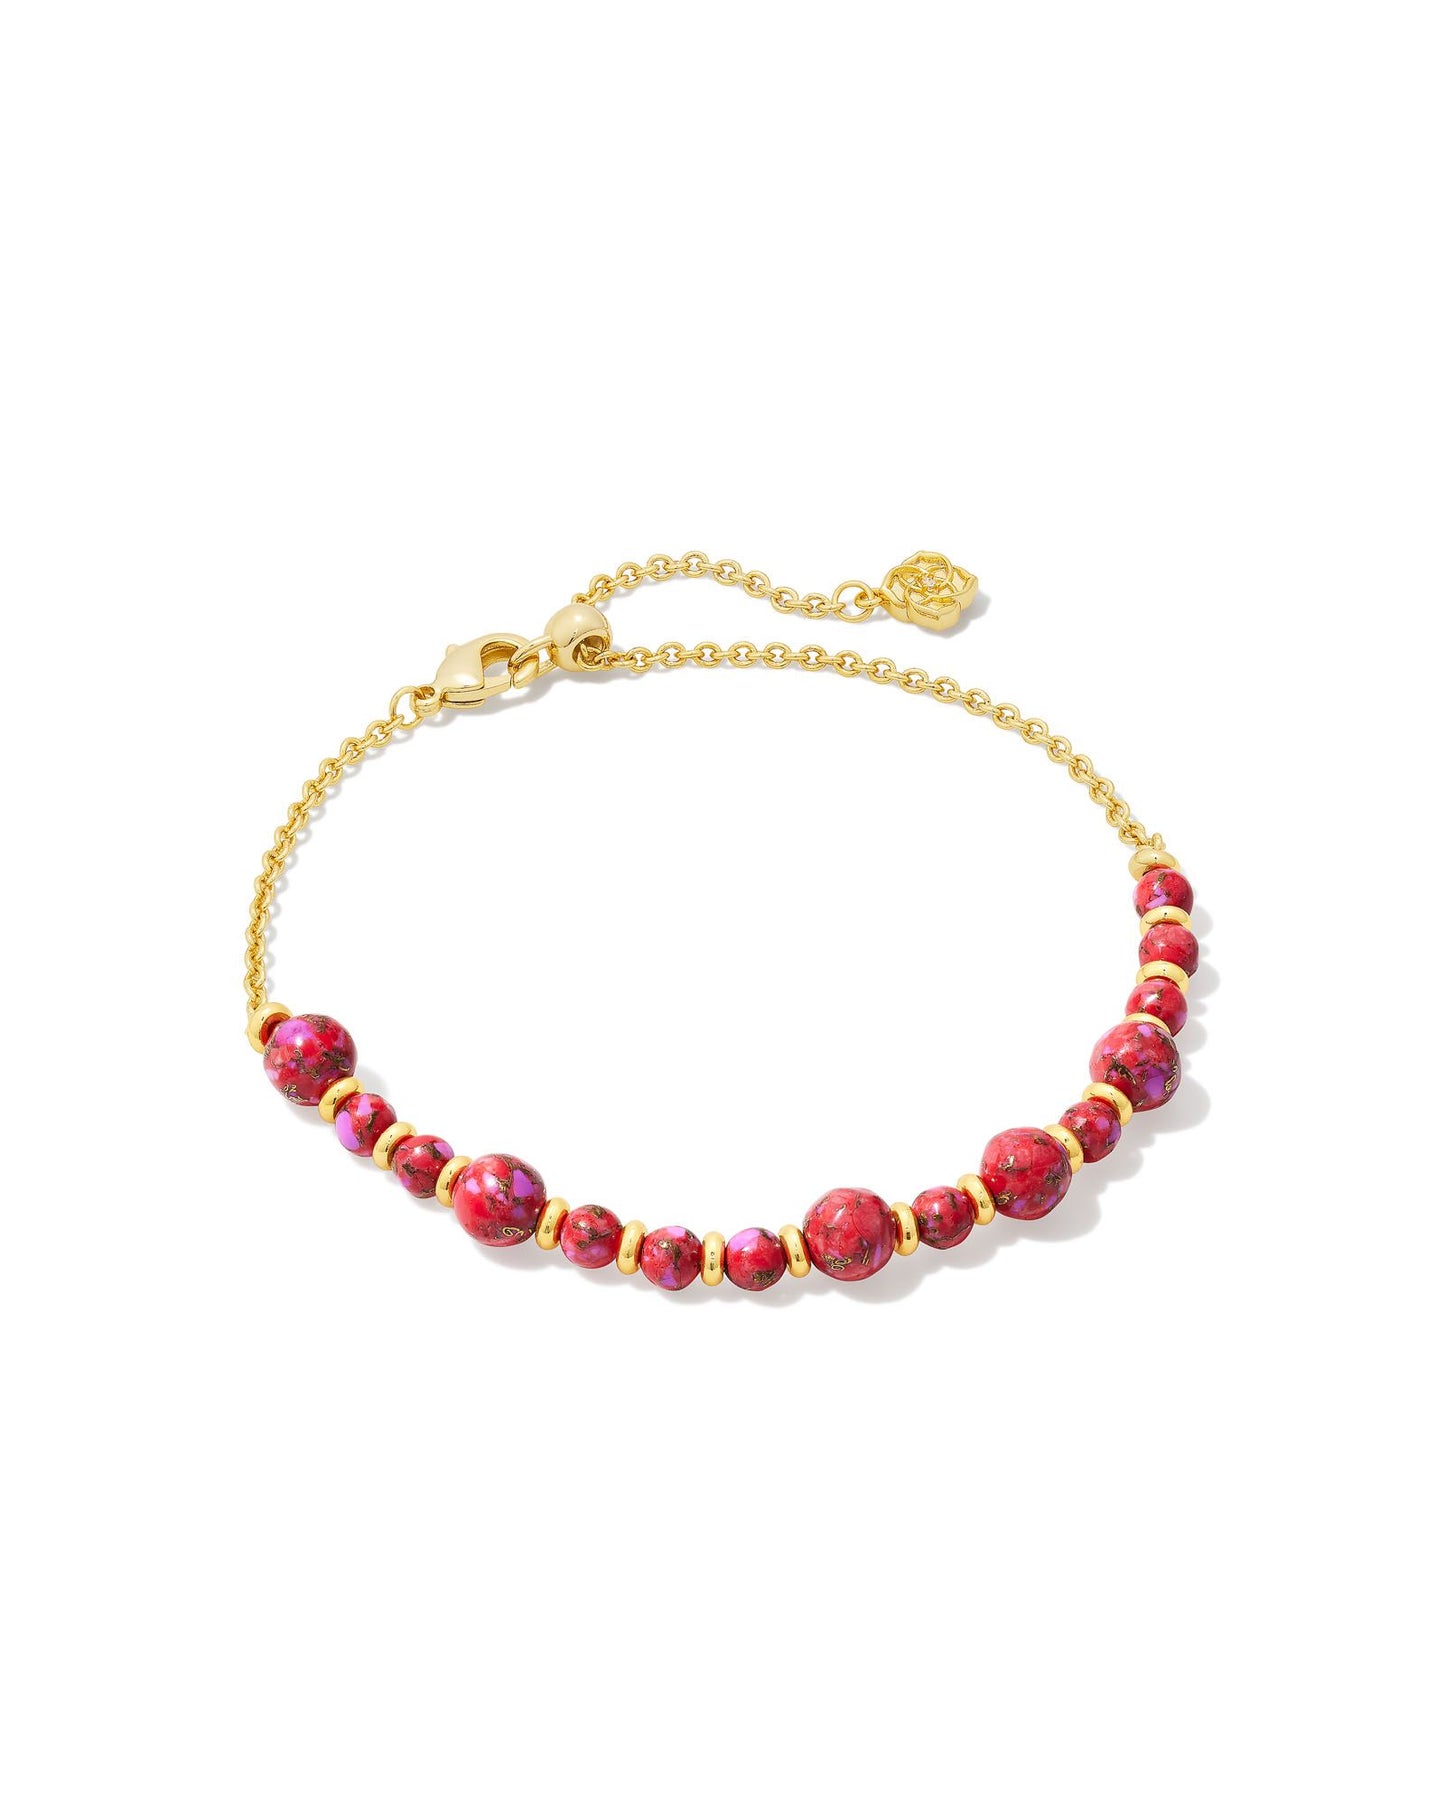 Jovie Bead Chain Bracelet | Gold Bronze Veined Red Fuchsia